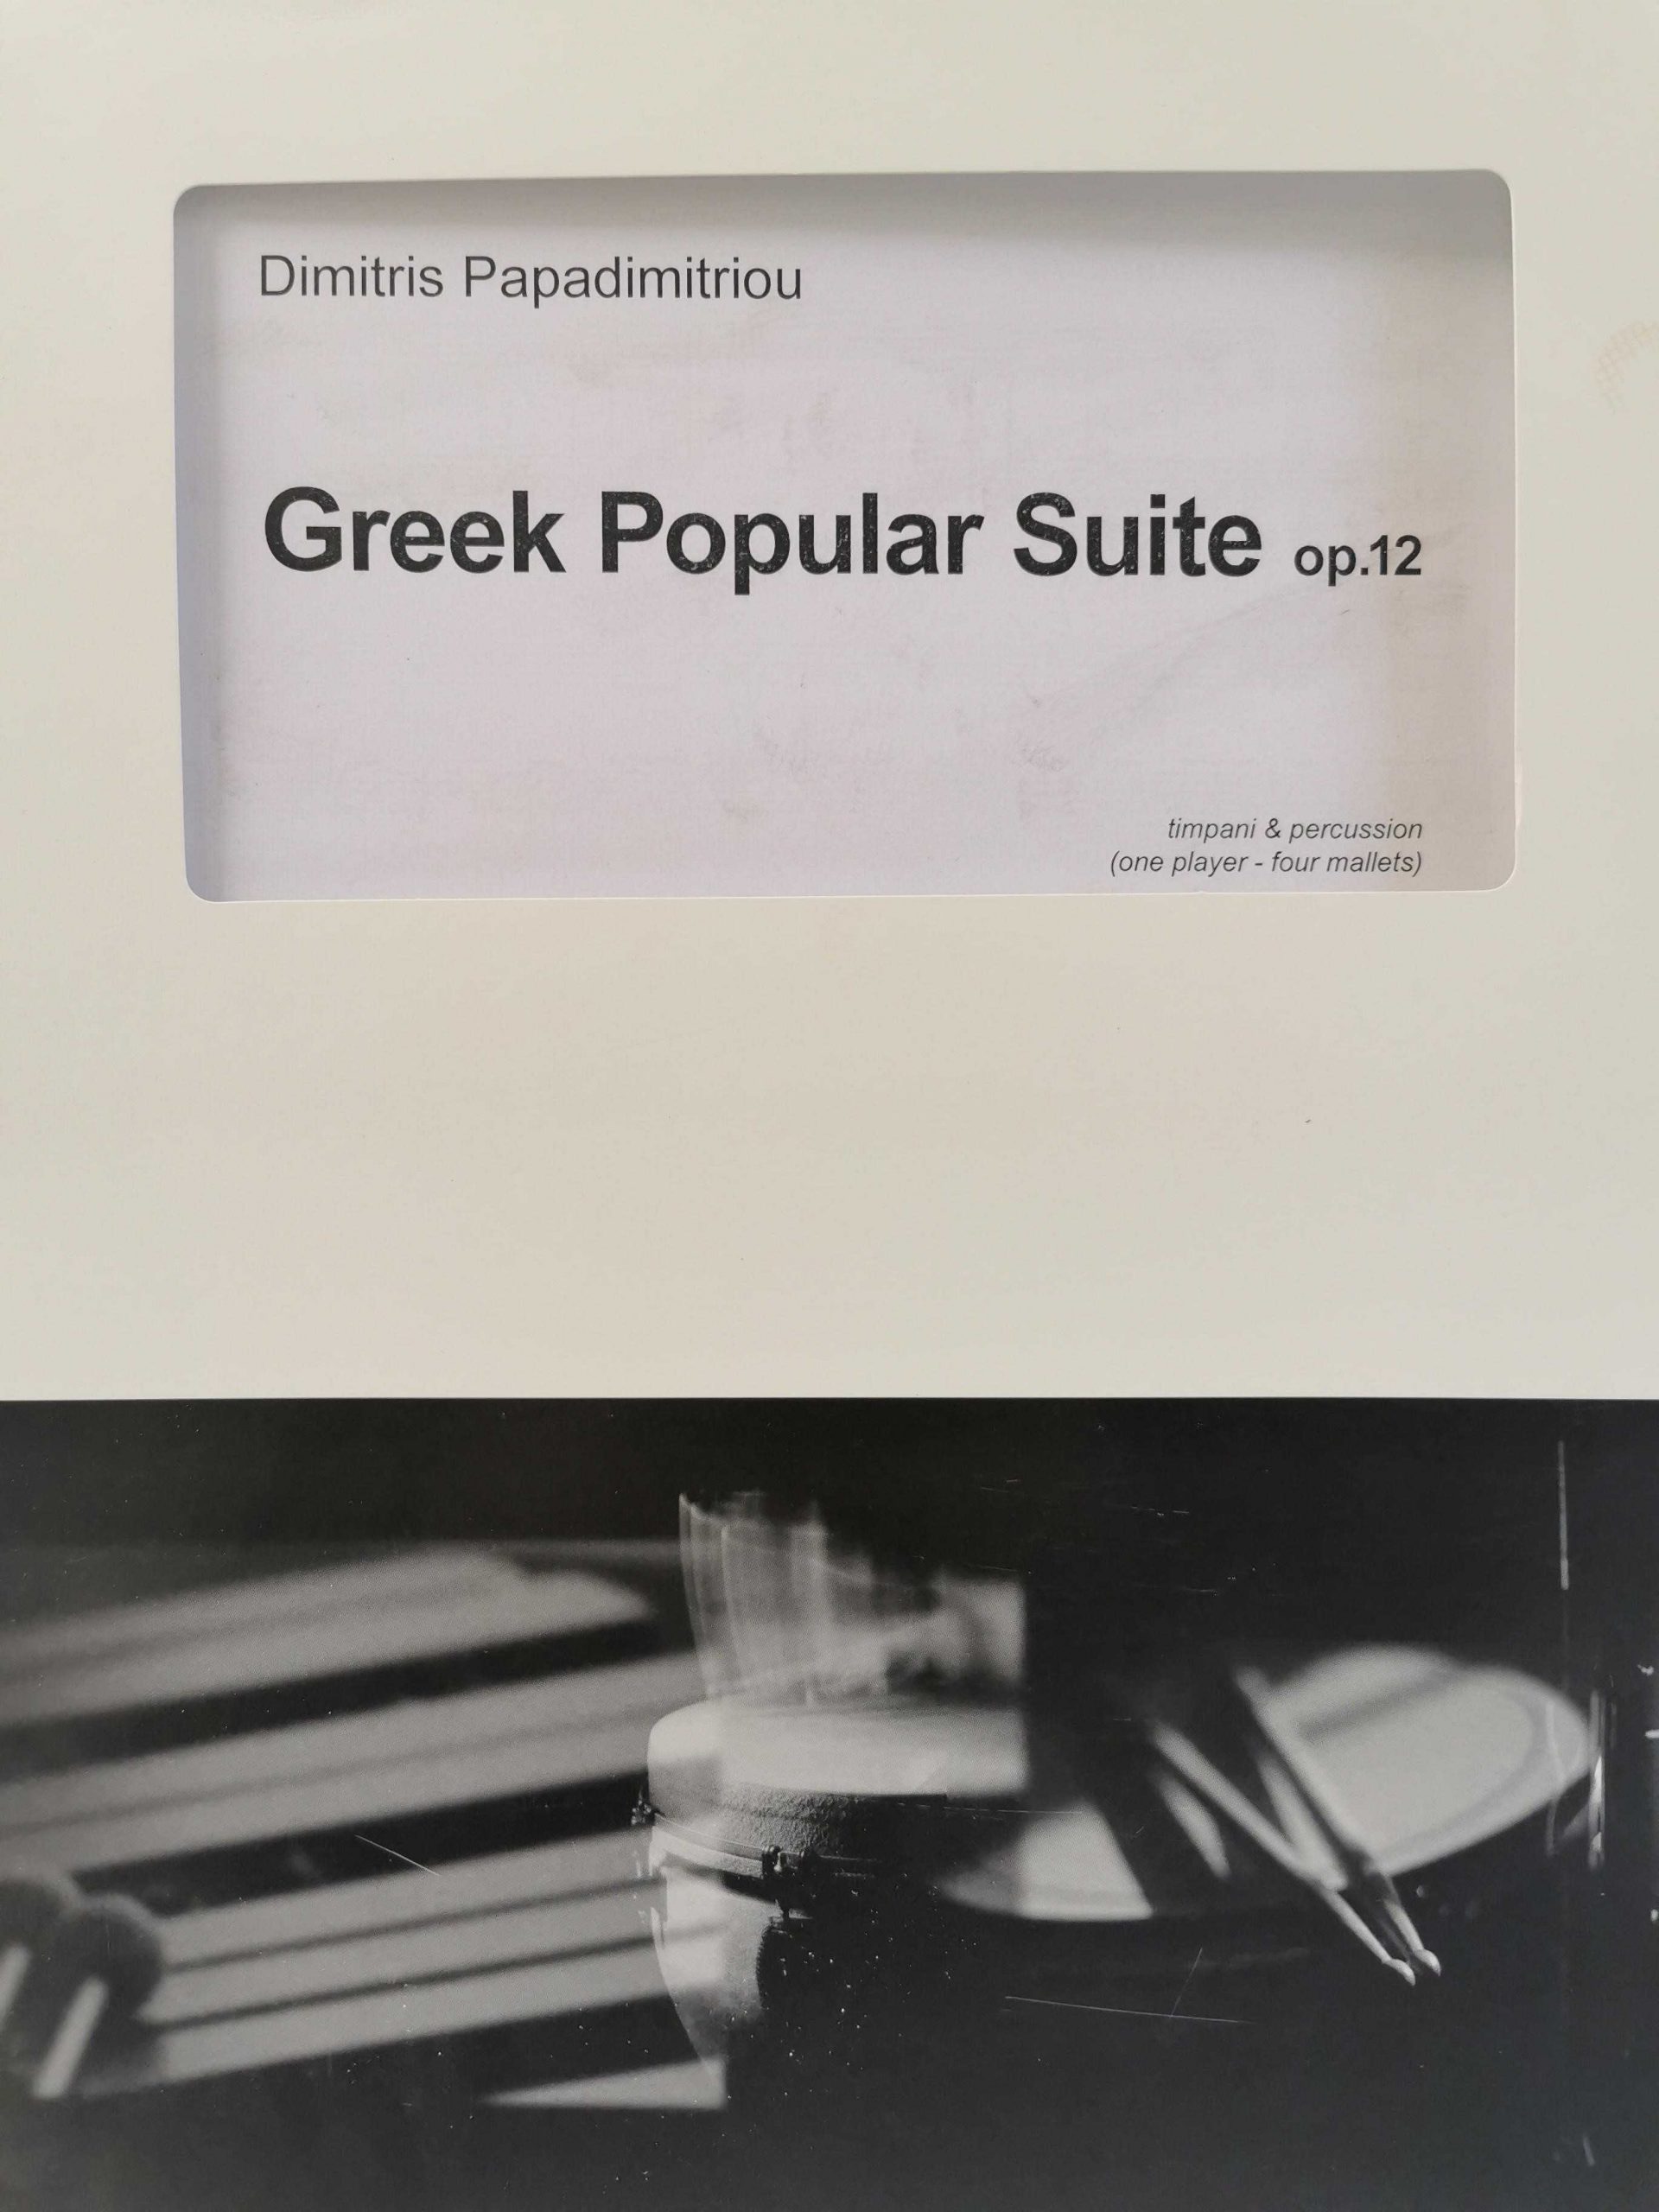 Greek Popular Suite op. 12 by Dmitris Papadimitriou